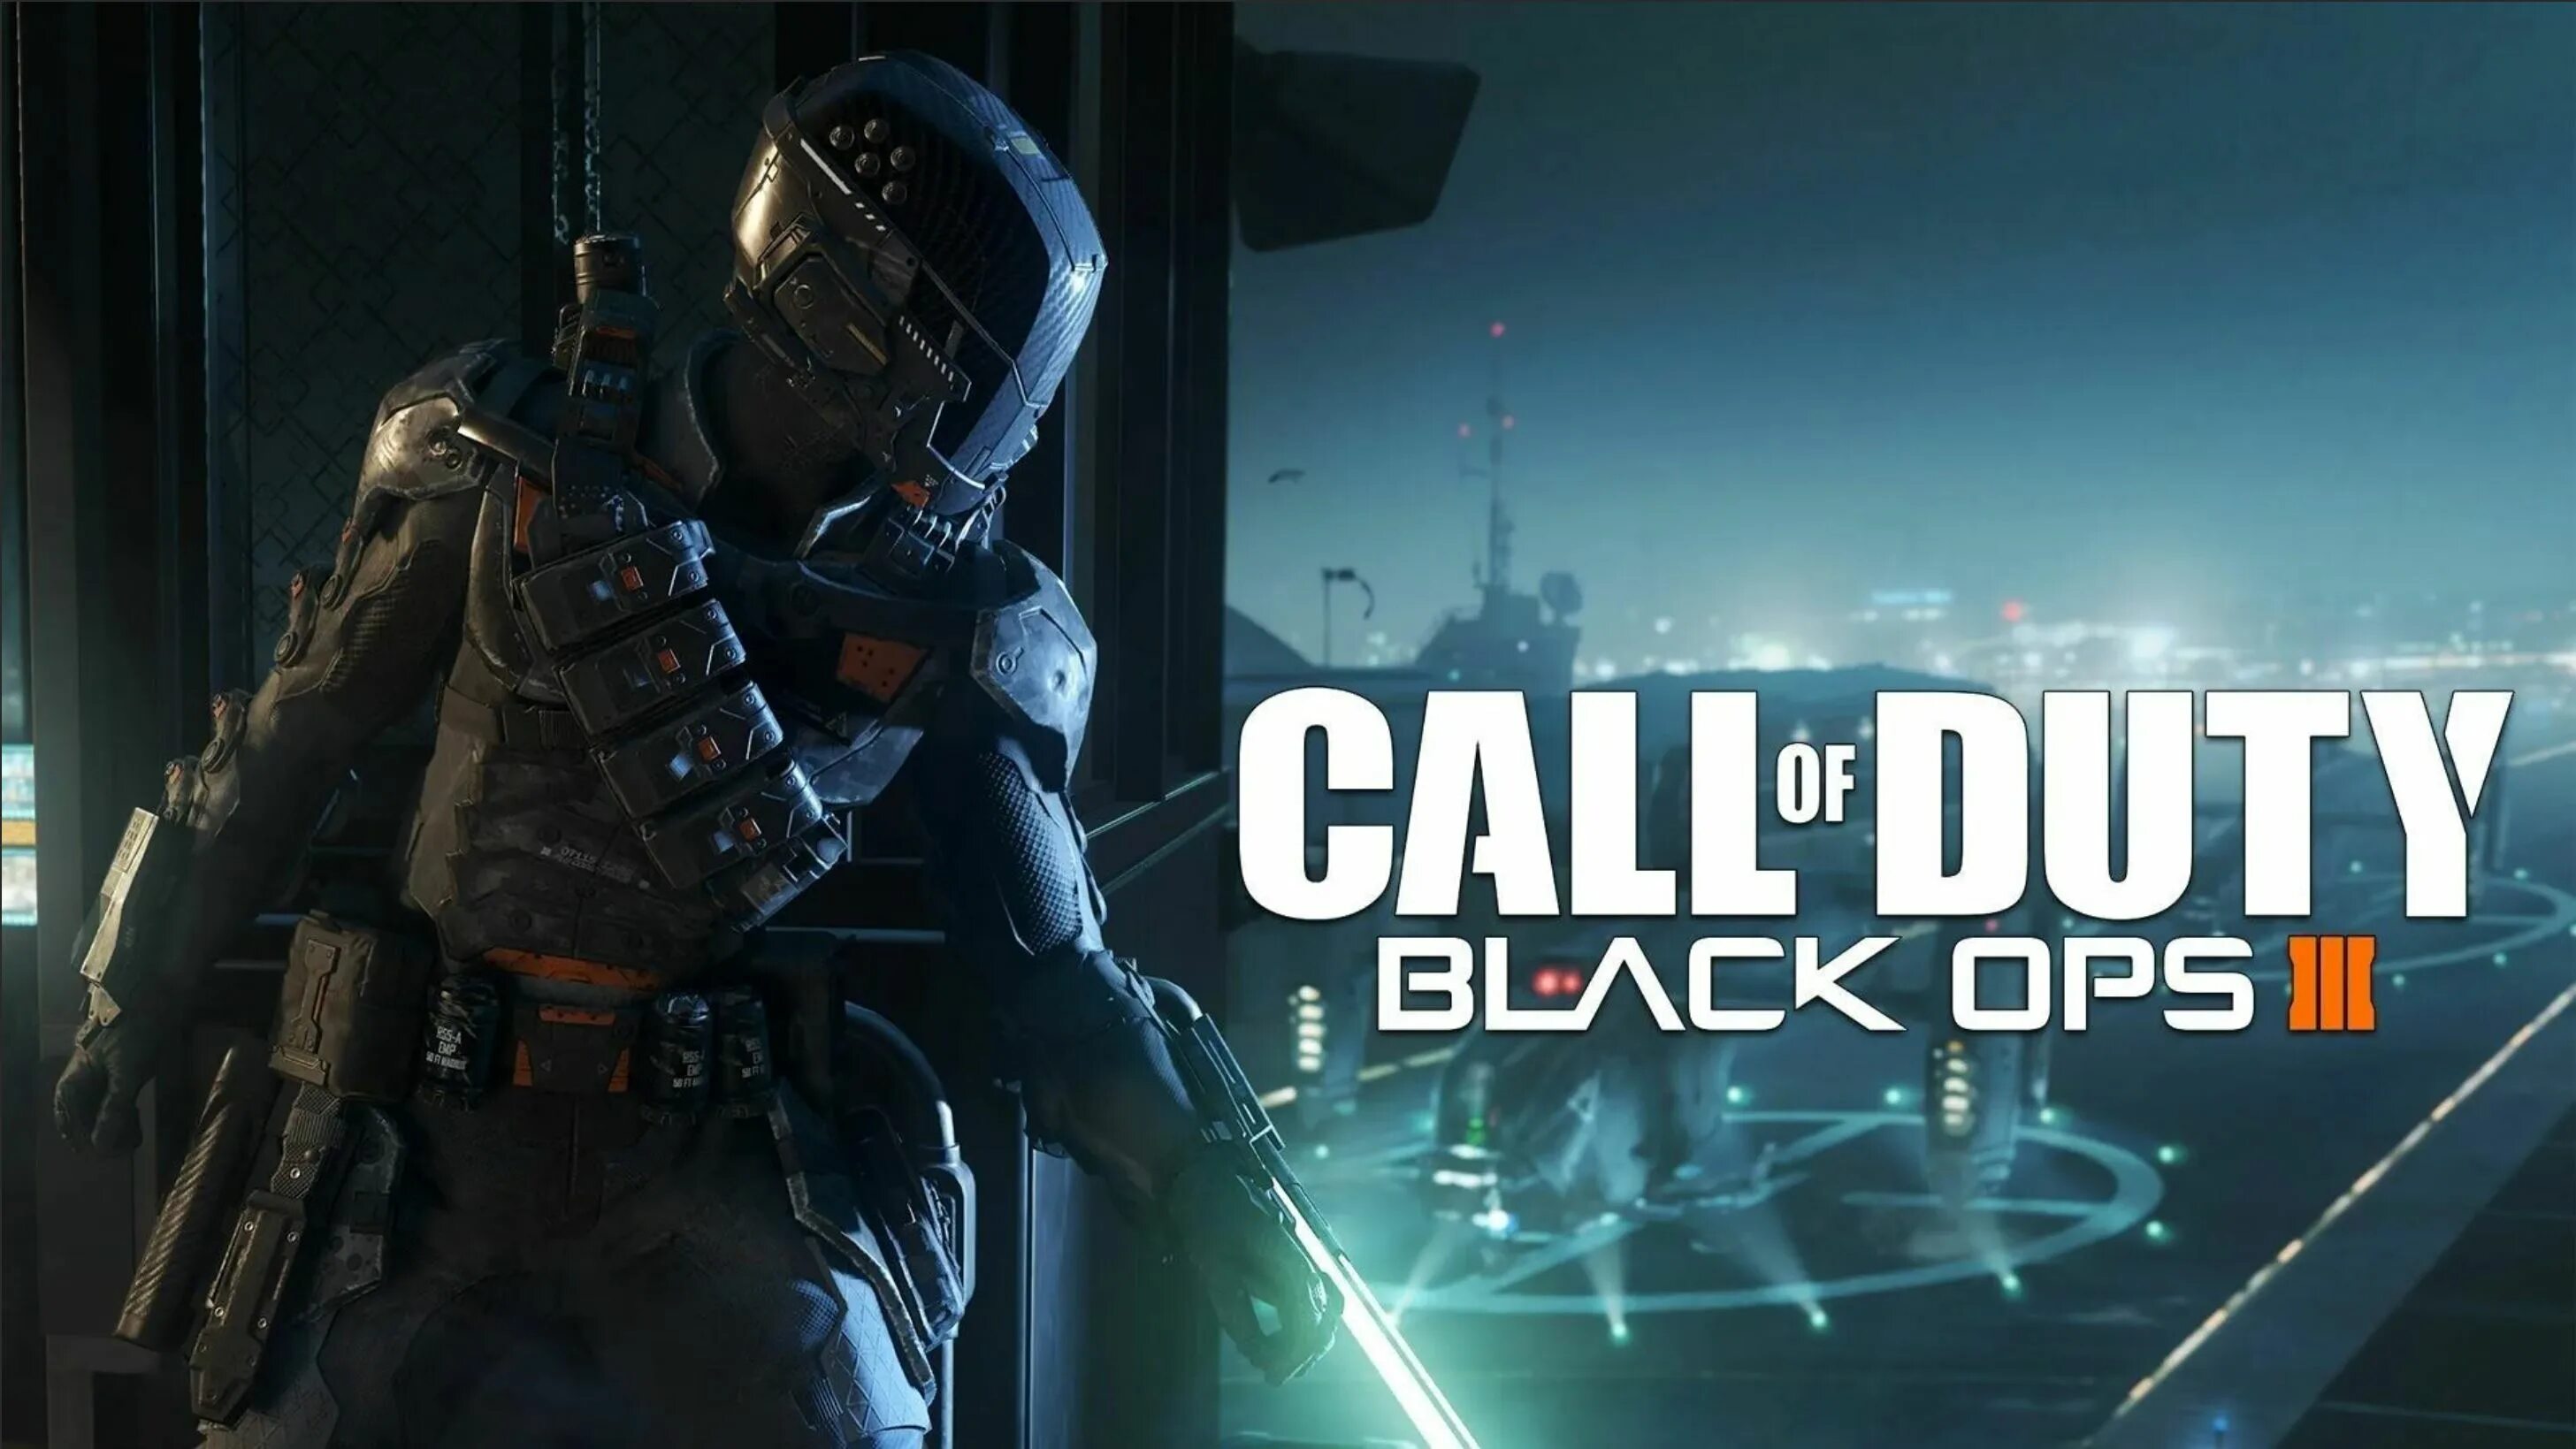 Калл оф дьюти опс 3. КОЛДА Блэк ОПС 3. Call of Duty Black ops 3 обои. Black ops 3 Постер. Call of Duty: Black ops 3 - Digital Deluxe Edition.